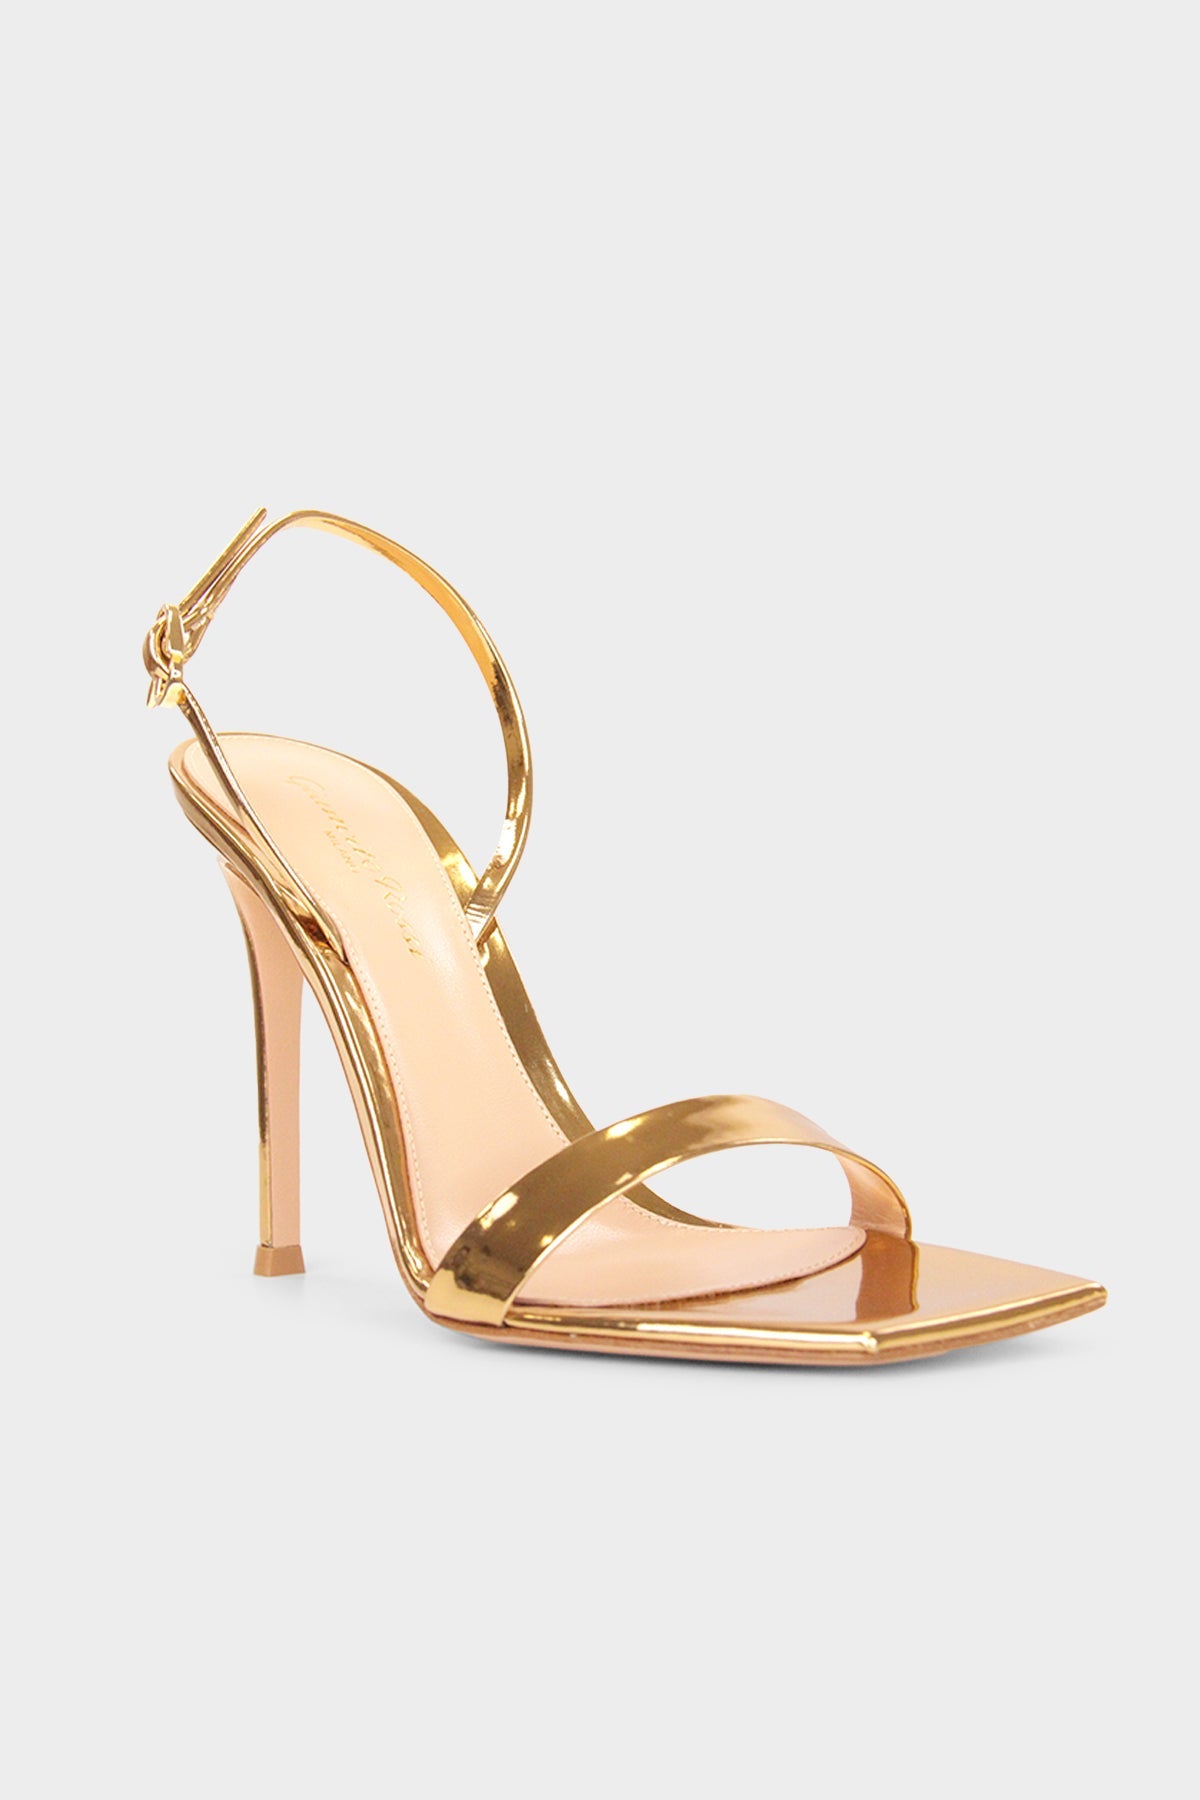 Glamorous Wide Fit block heel metallic sandals in gold | ASOS